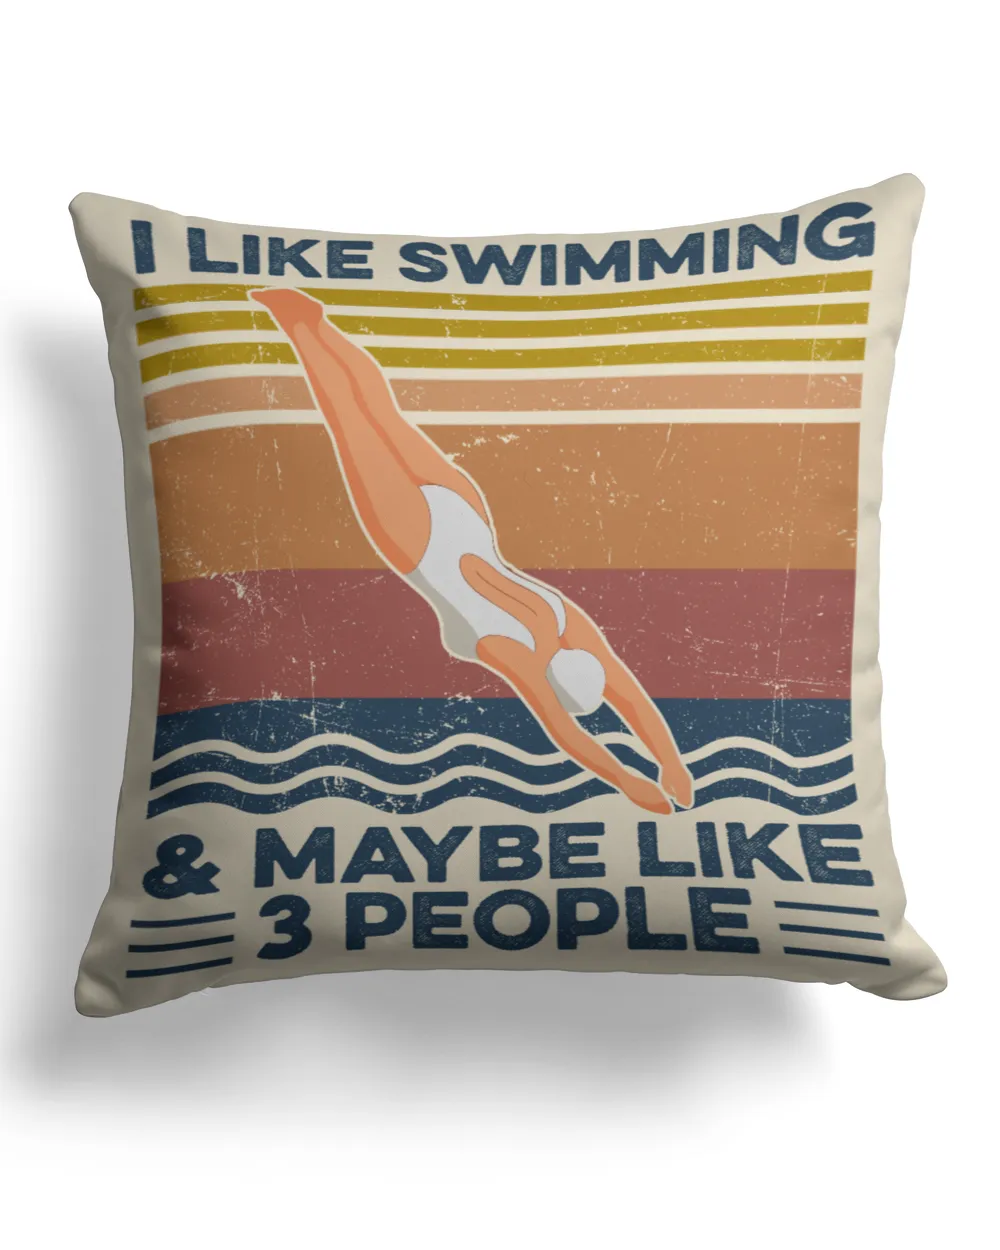 I like swimming and maybe like 3 people